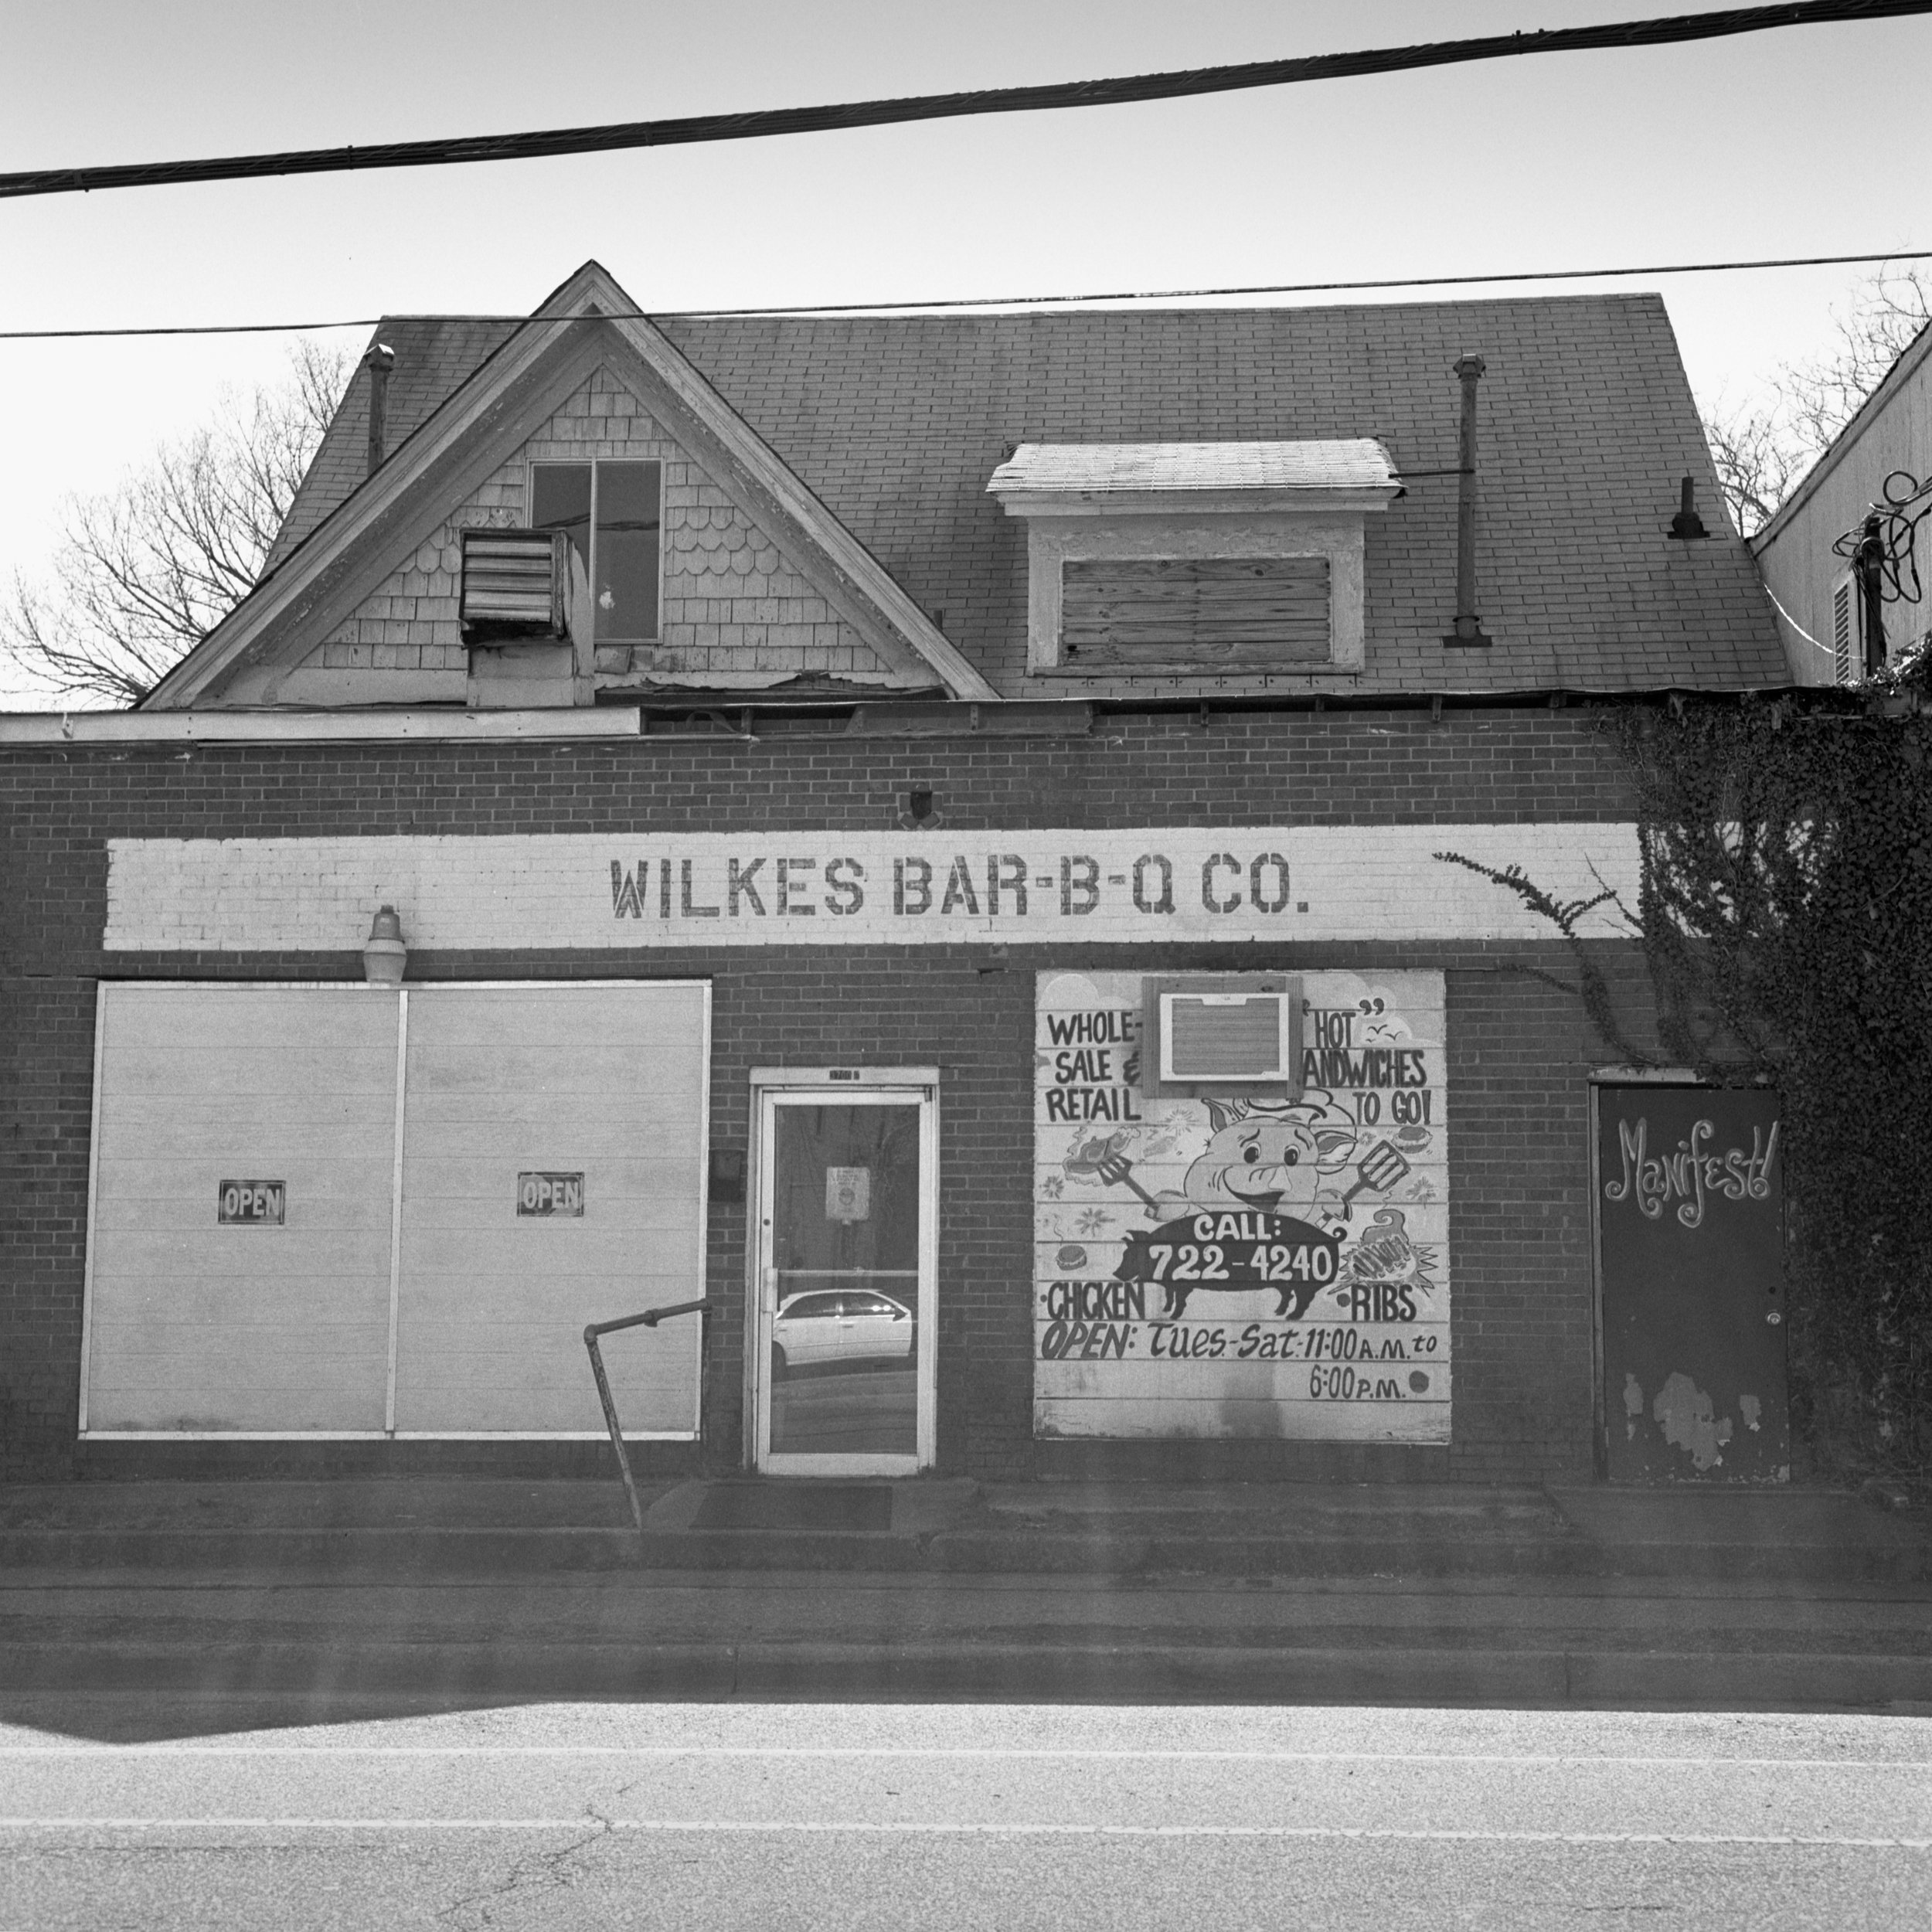 Wilkes Bar-B-Q Co., Hampton, VA